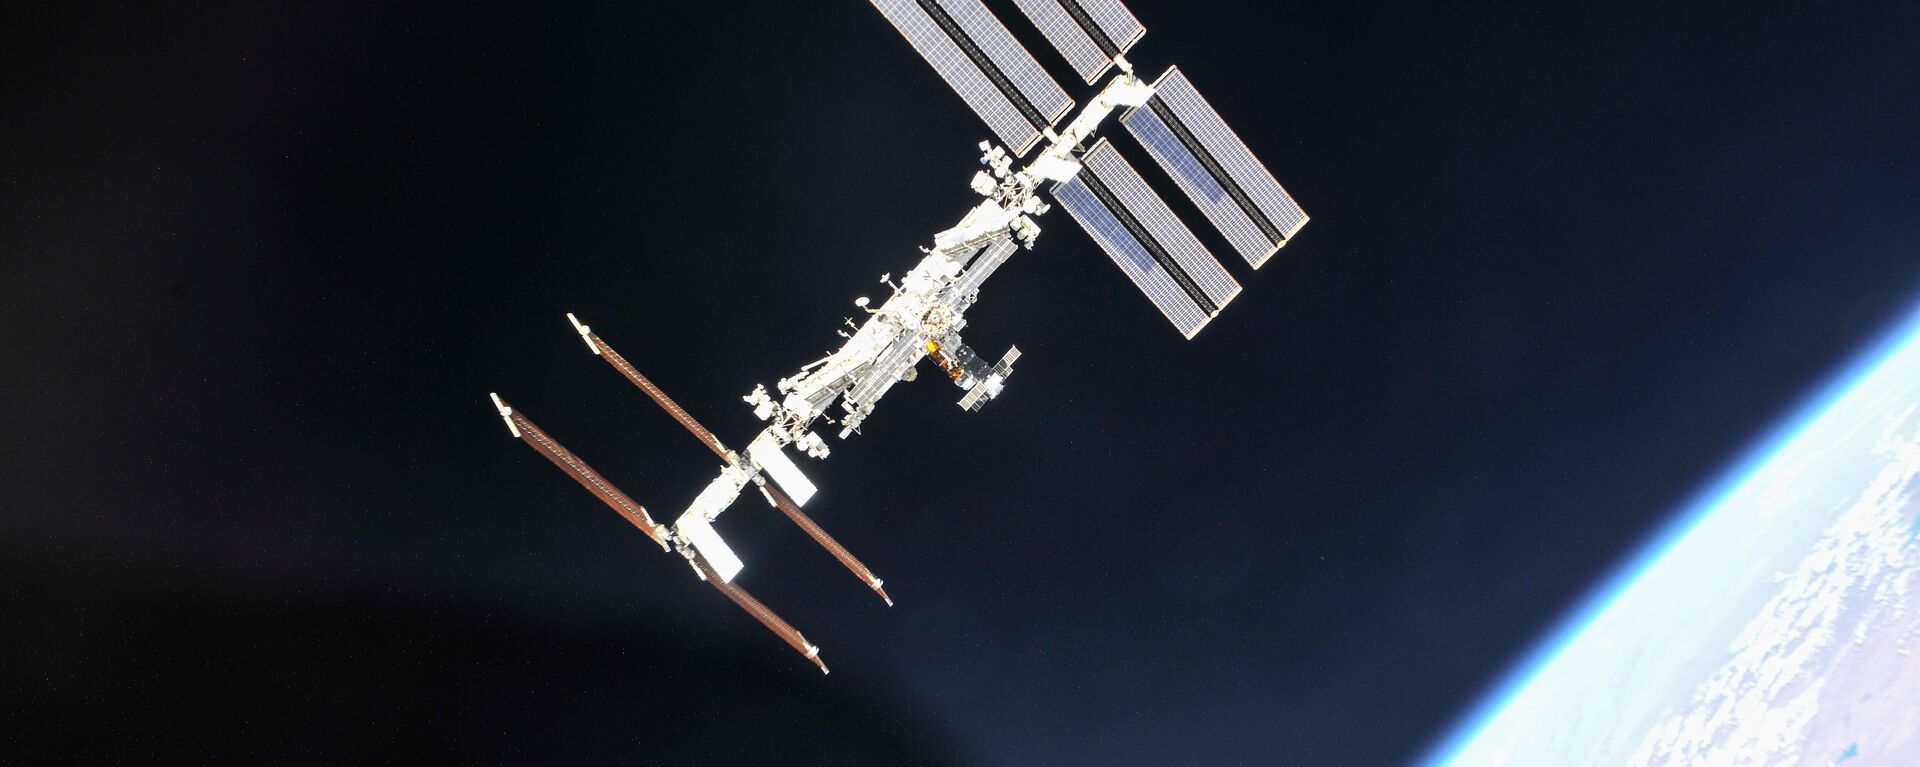 Estación Espacial Internacional (EEI)  - Sputnik Mundo, 1920, 31.12.2021